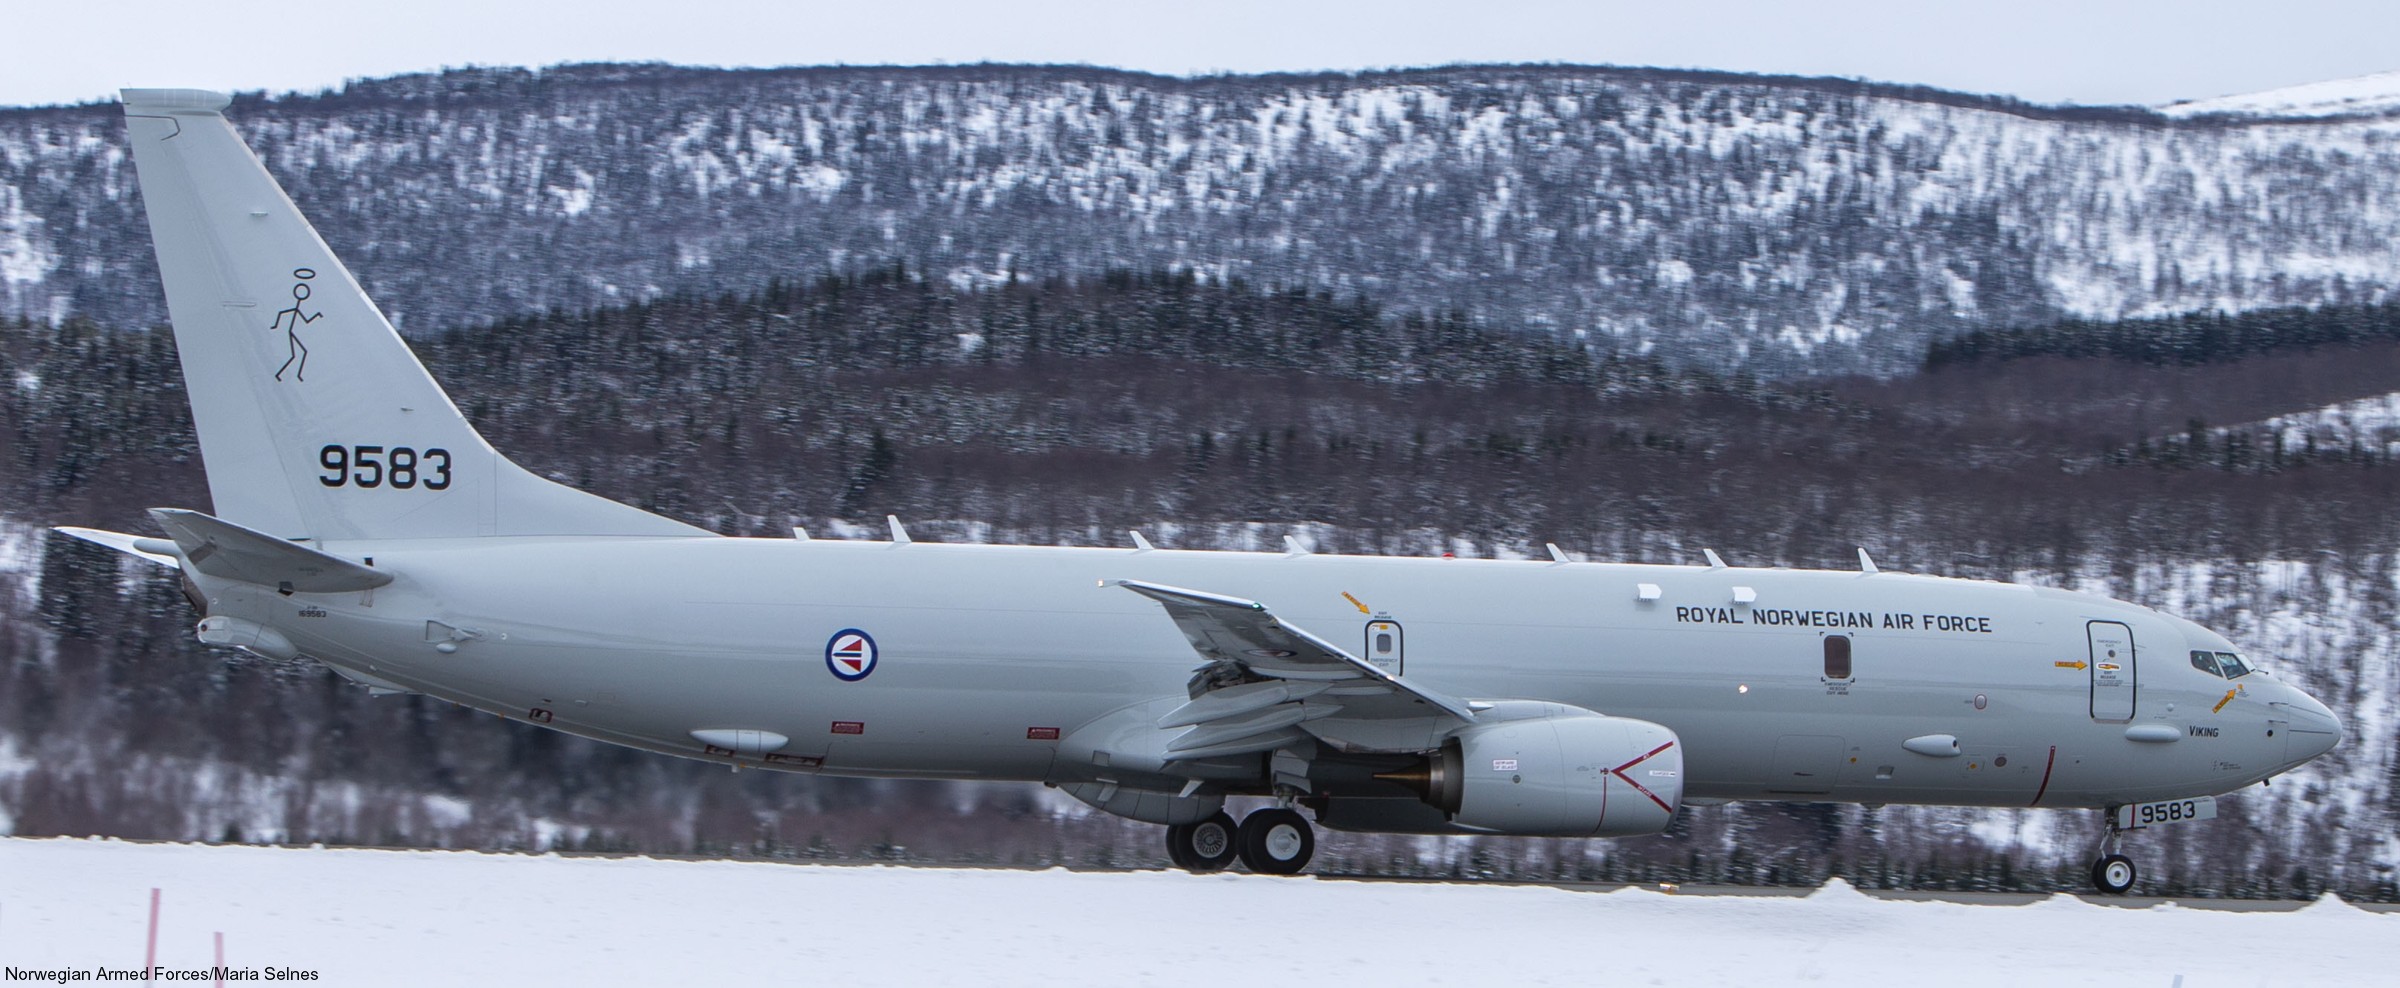 p-8a poseidon maritime patrol aircraft royal norwegian air force luftforsvaret 9583 viking 16